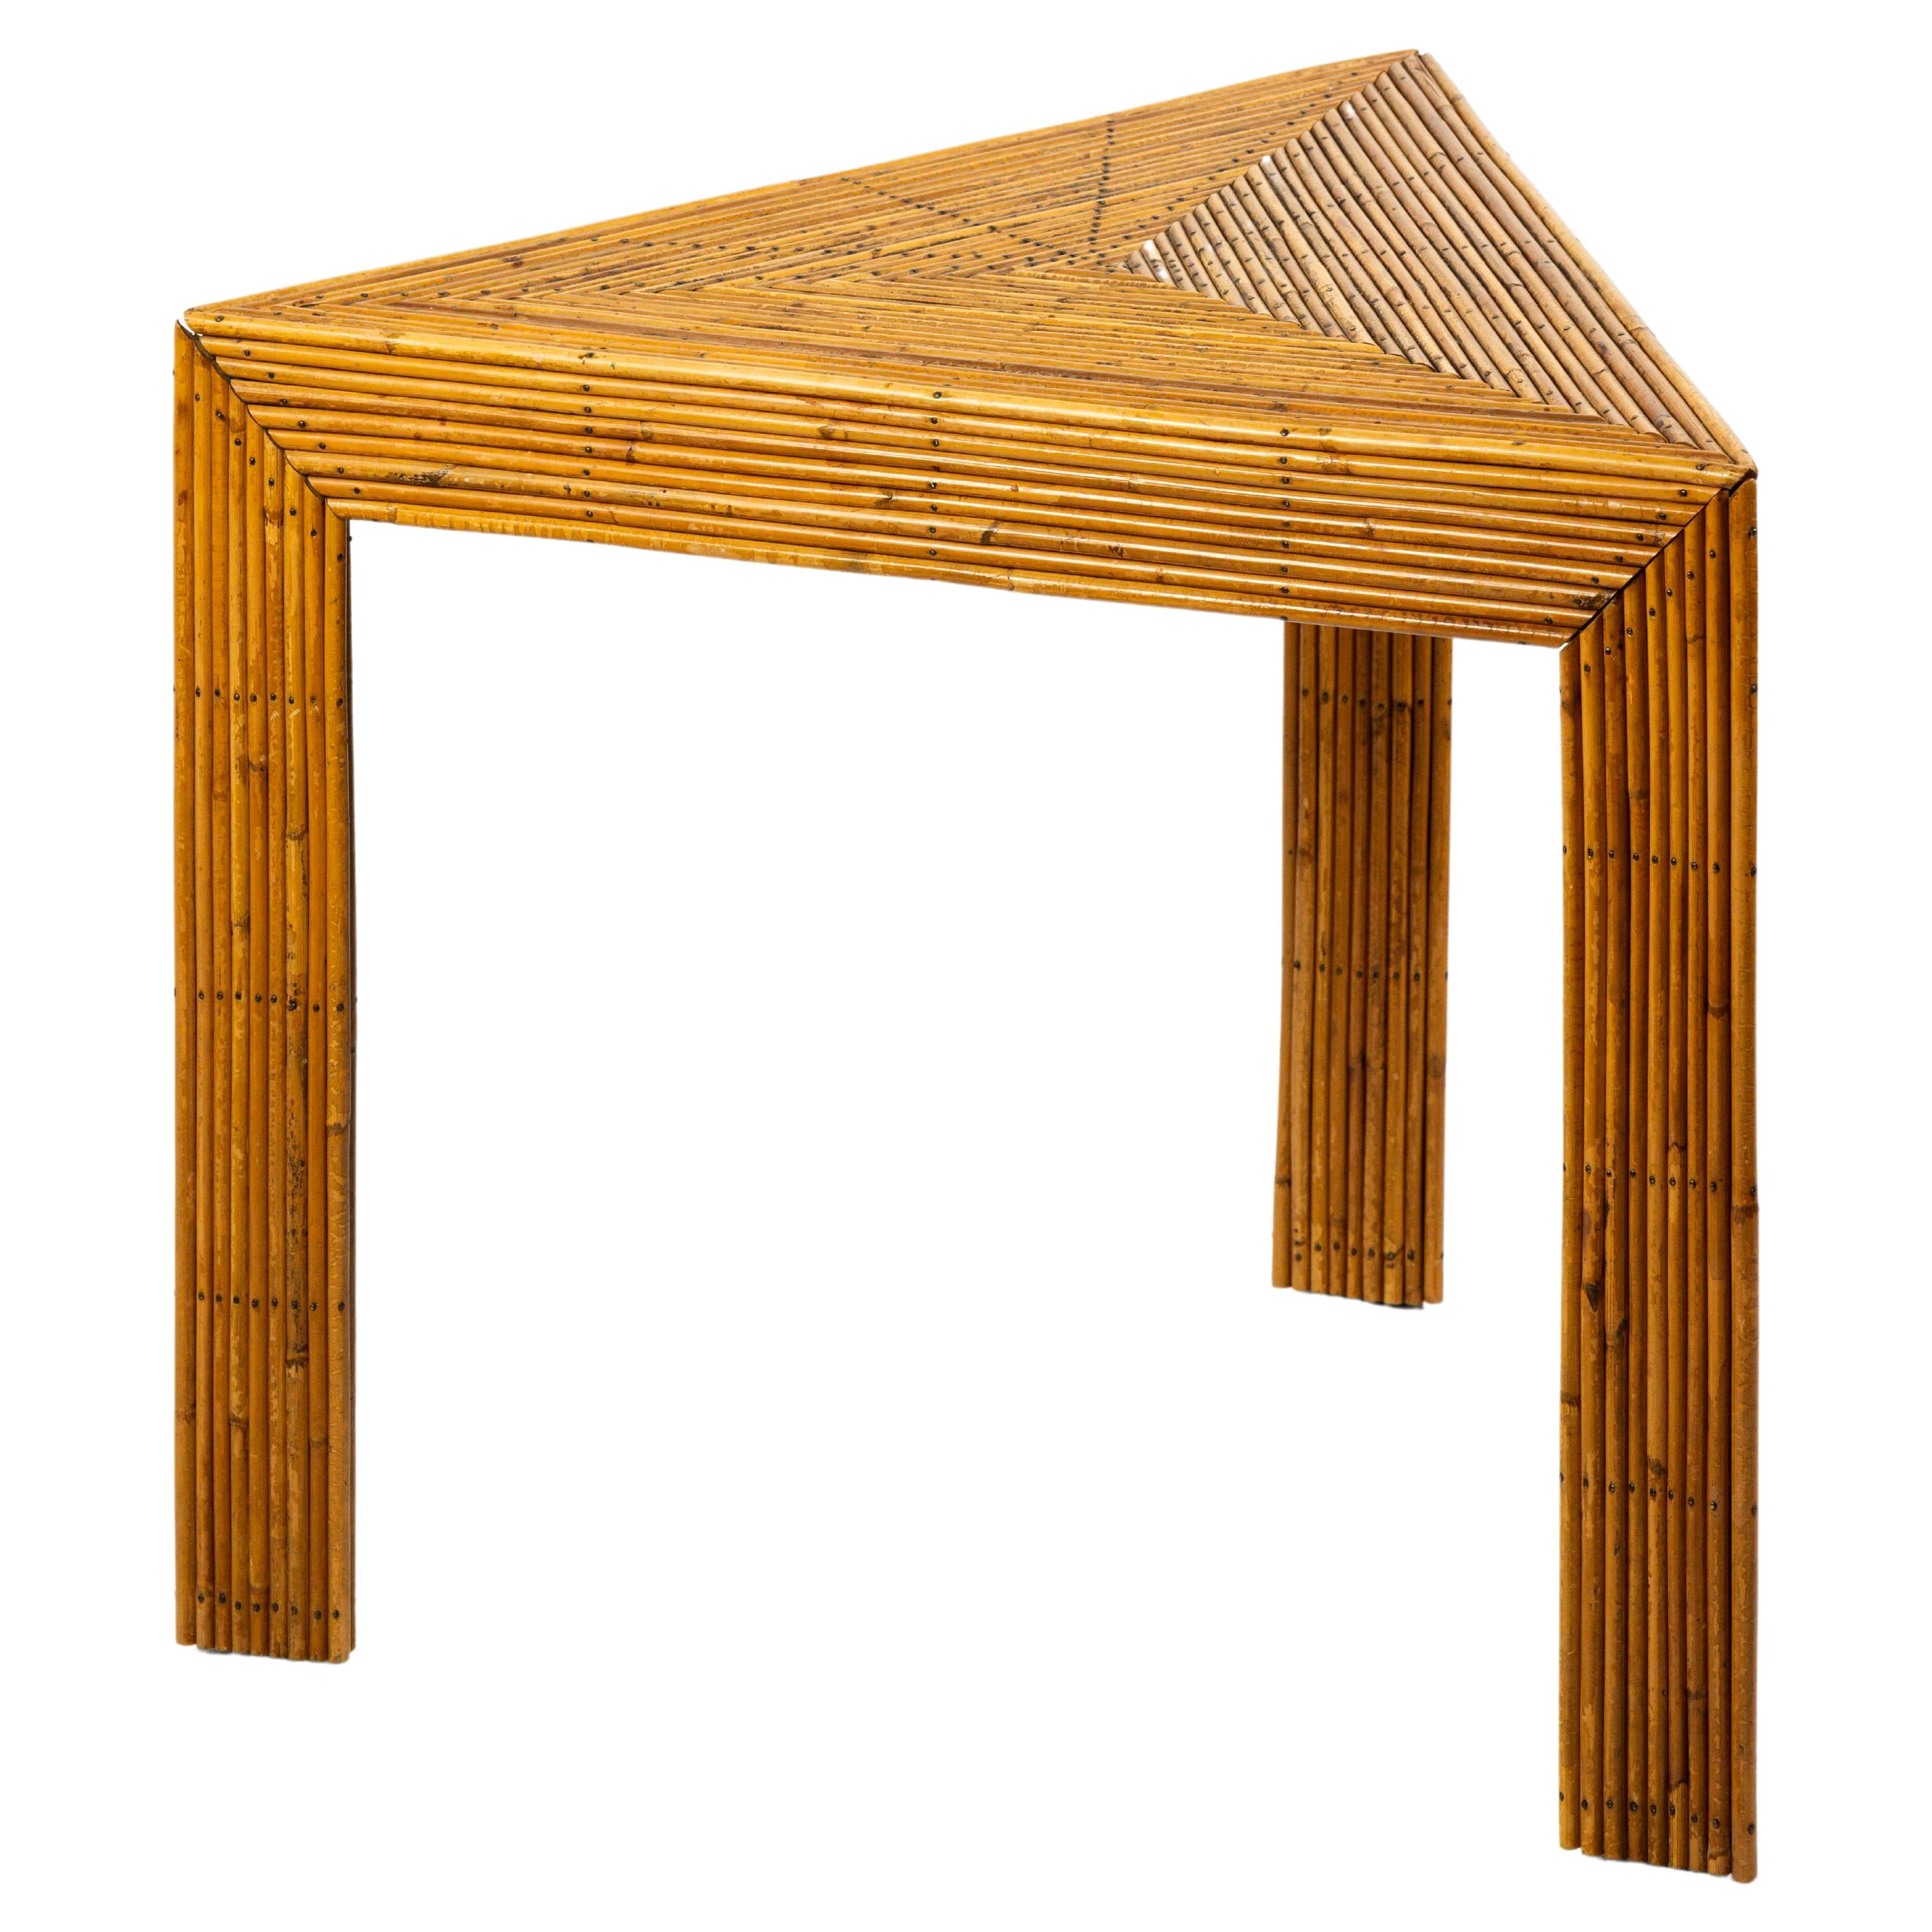 Rattan triangular table For Sale